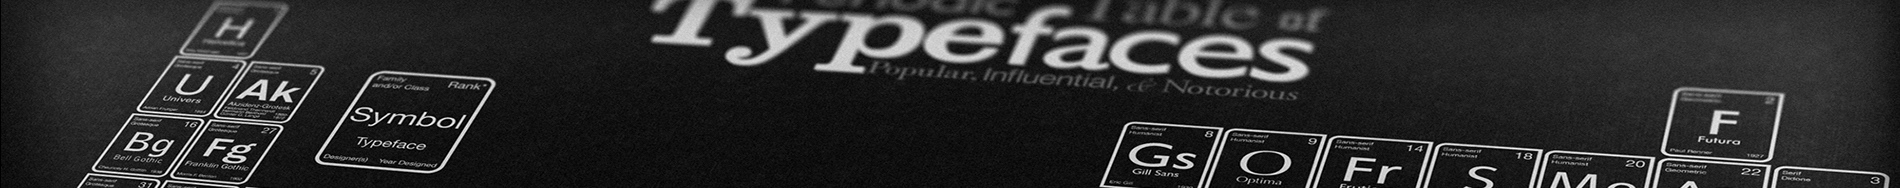 Joao C R Fonseca's profile banner